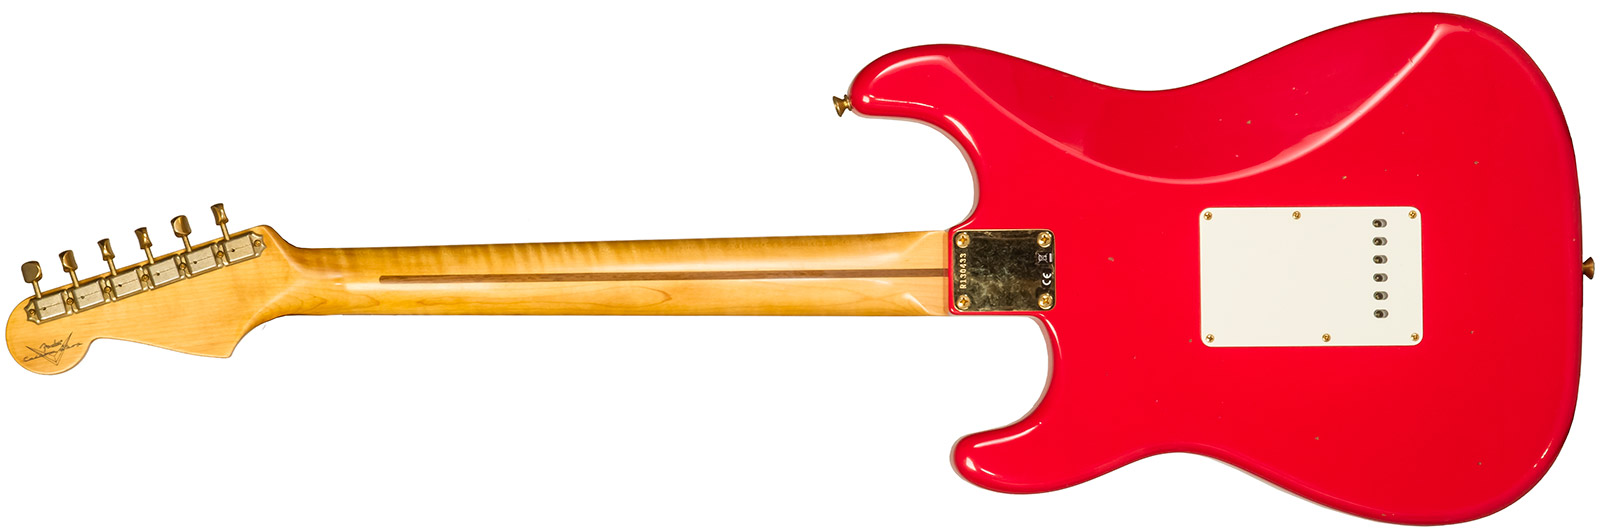 Fender Custom Shop Strat 1956 3s Trem Mn #r130433 - Journeyman Relic Fiesta Red - Str shape electric guitar - Variation 1